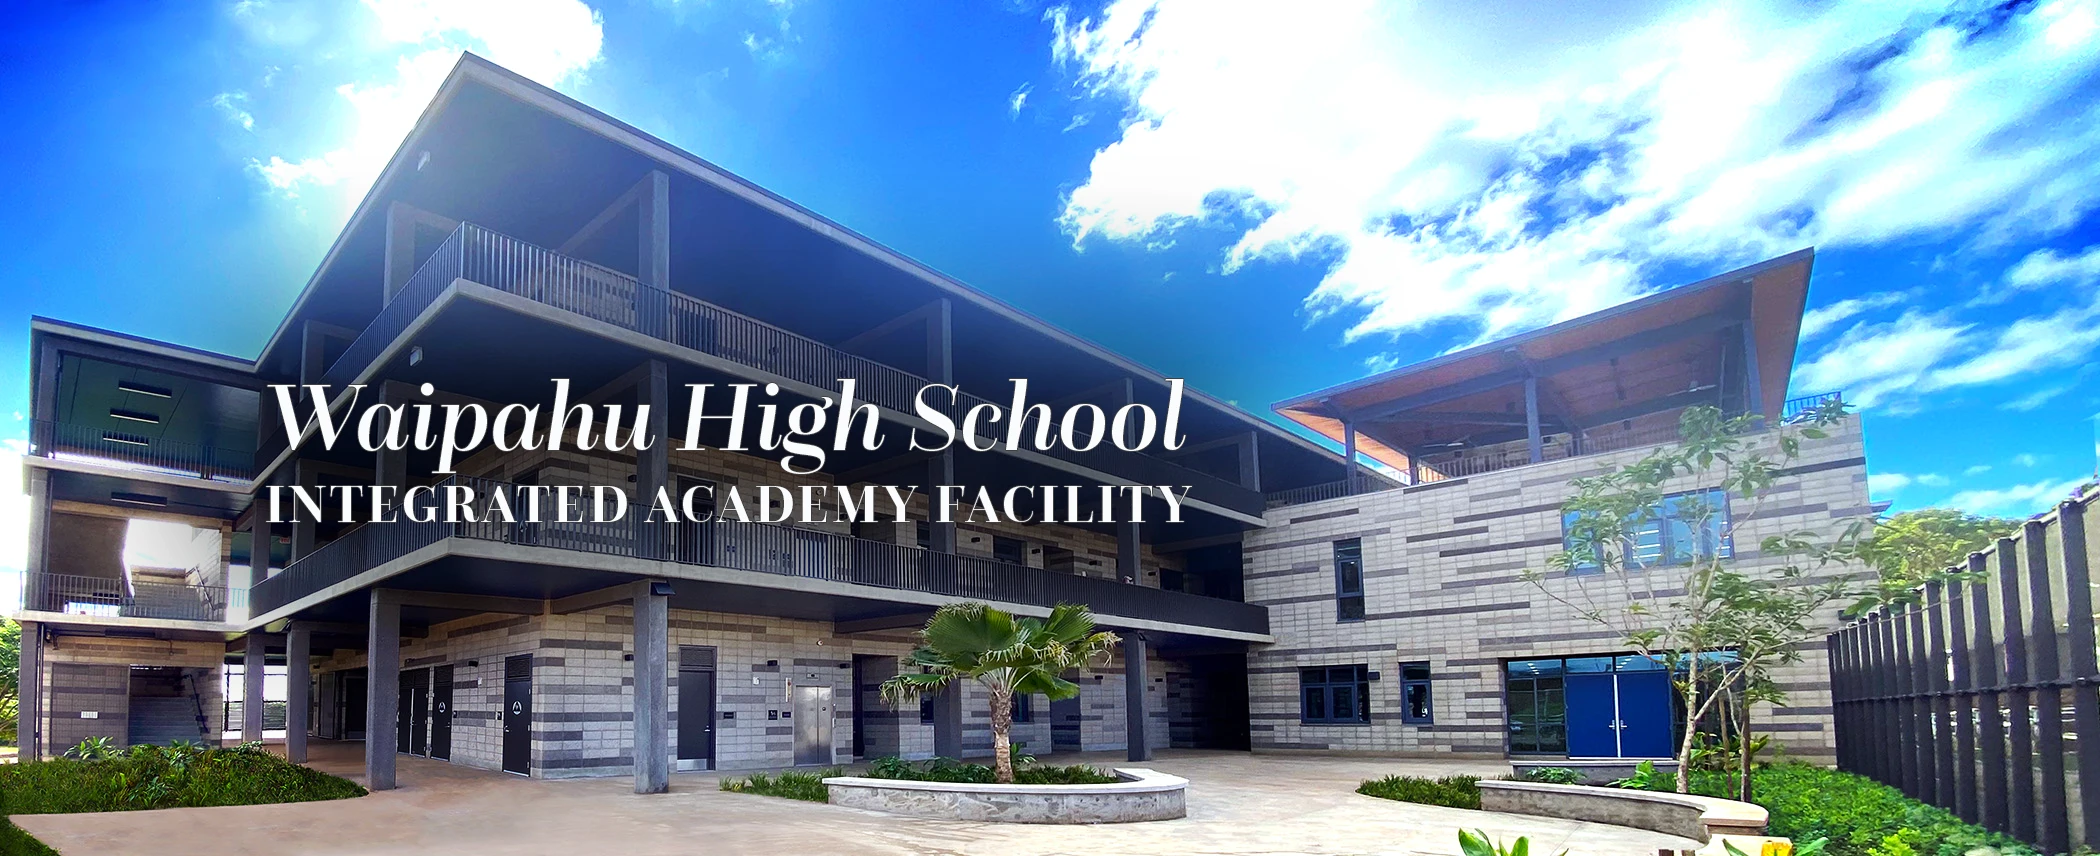 Waipahu High School Integrated Academy Facility exterior classrooms